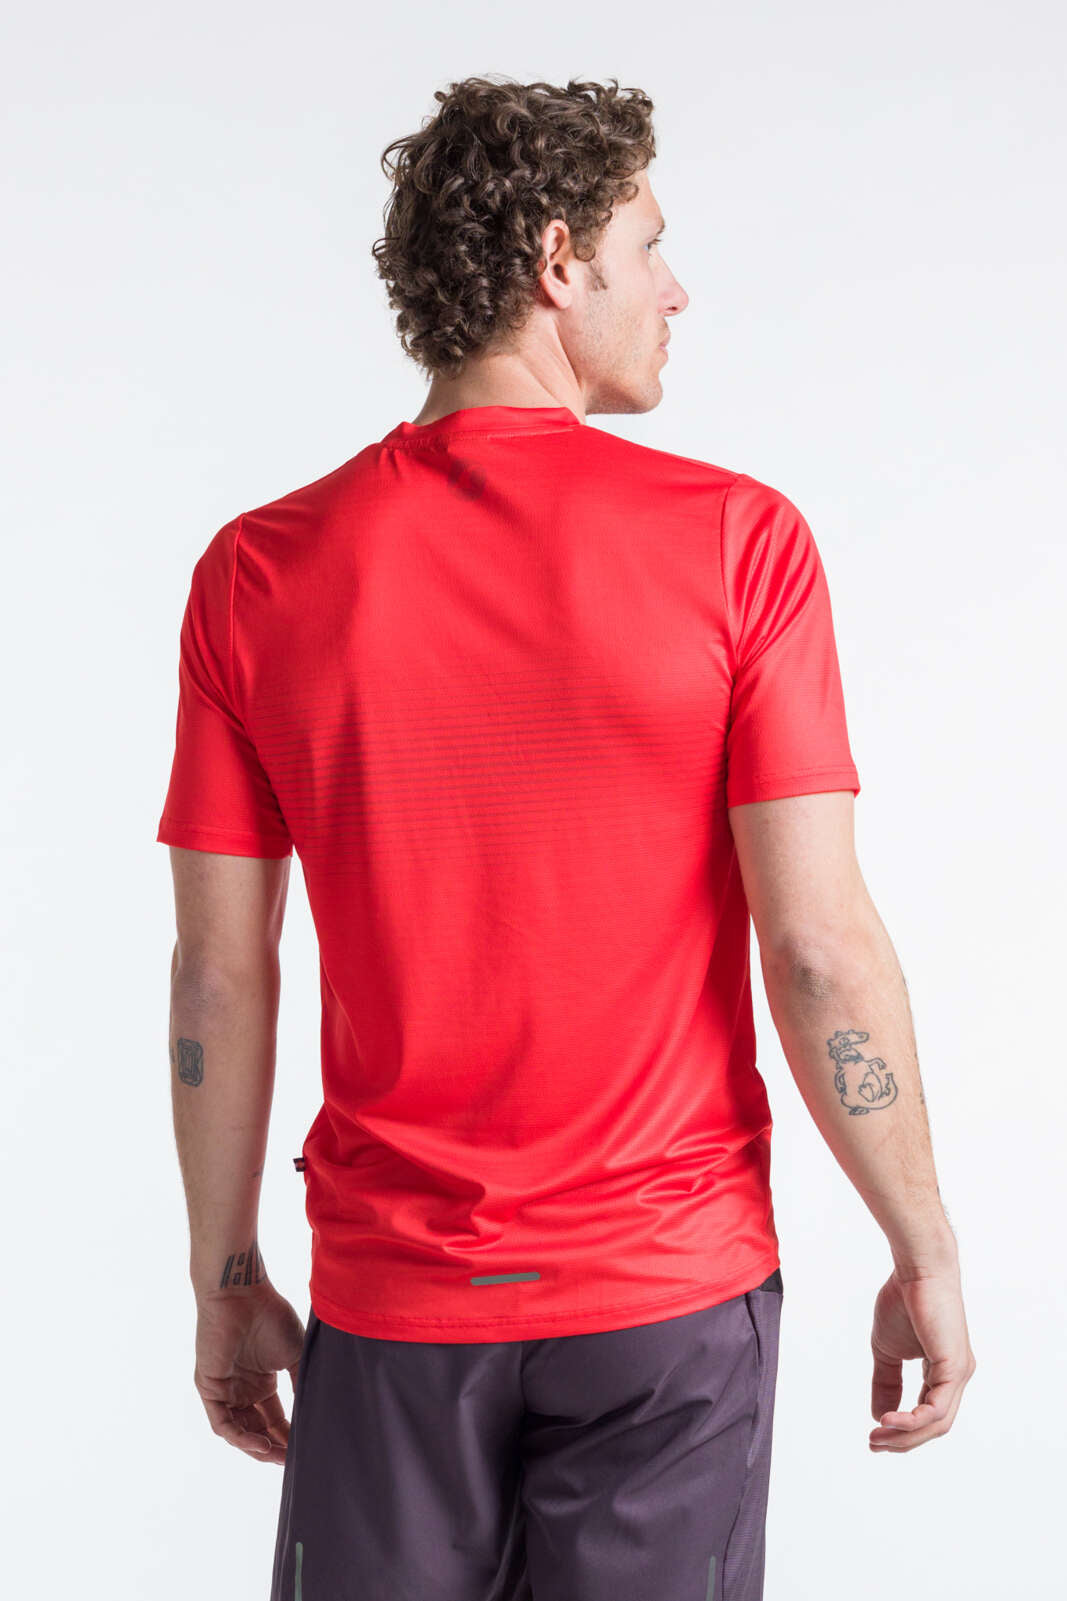 Men's Red Running Shirt - Back View